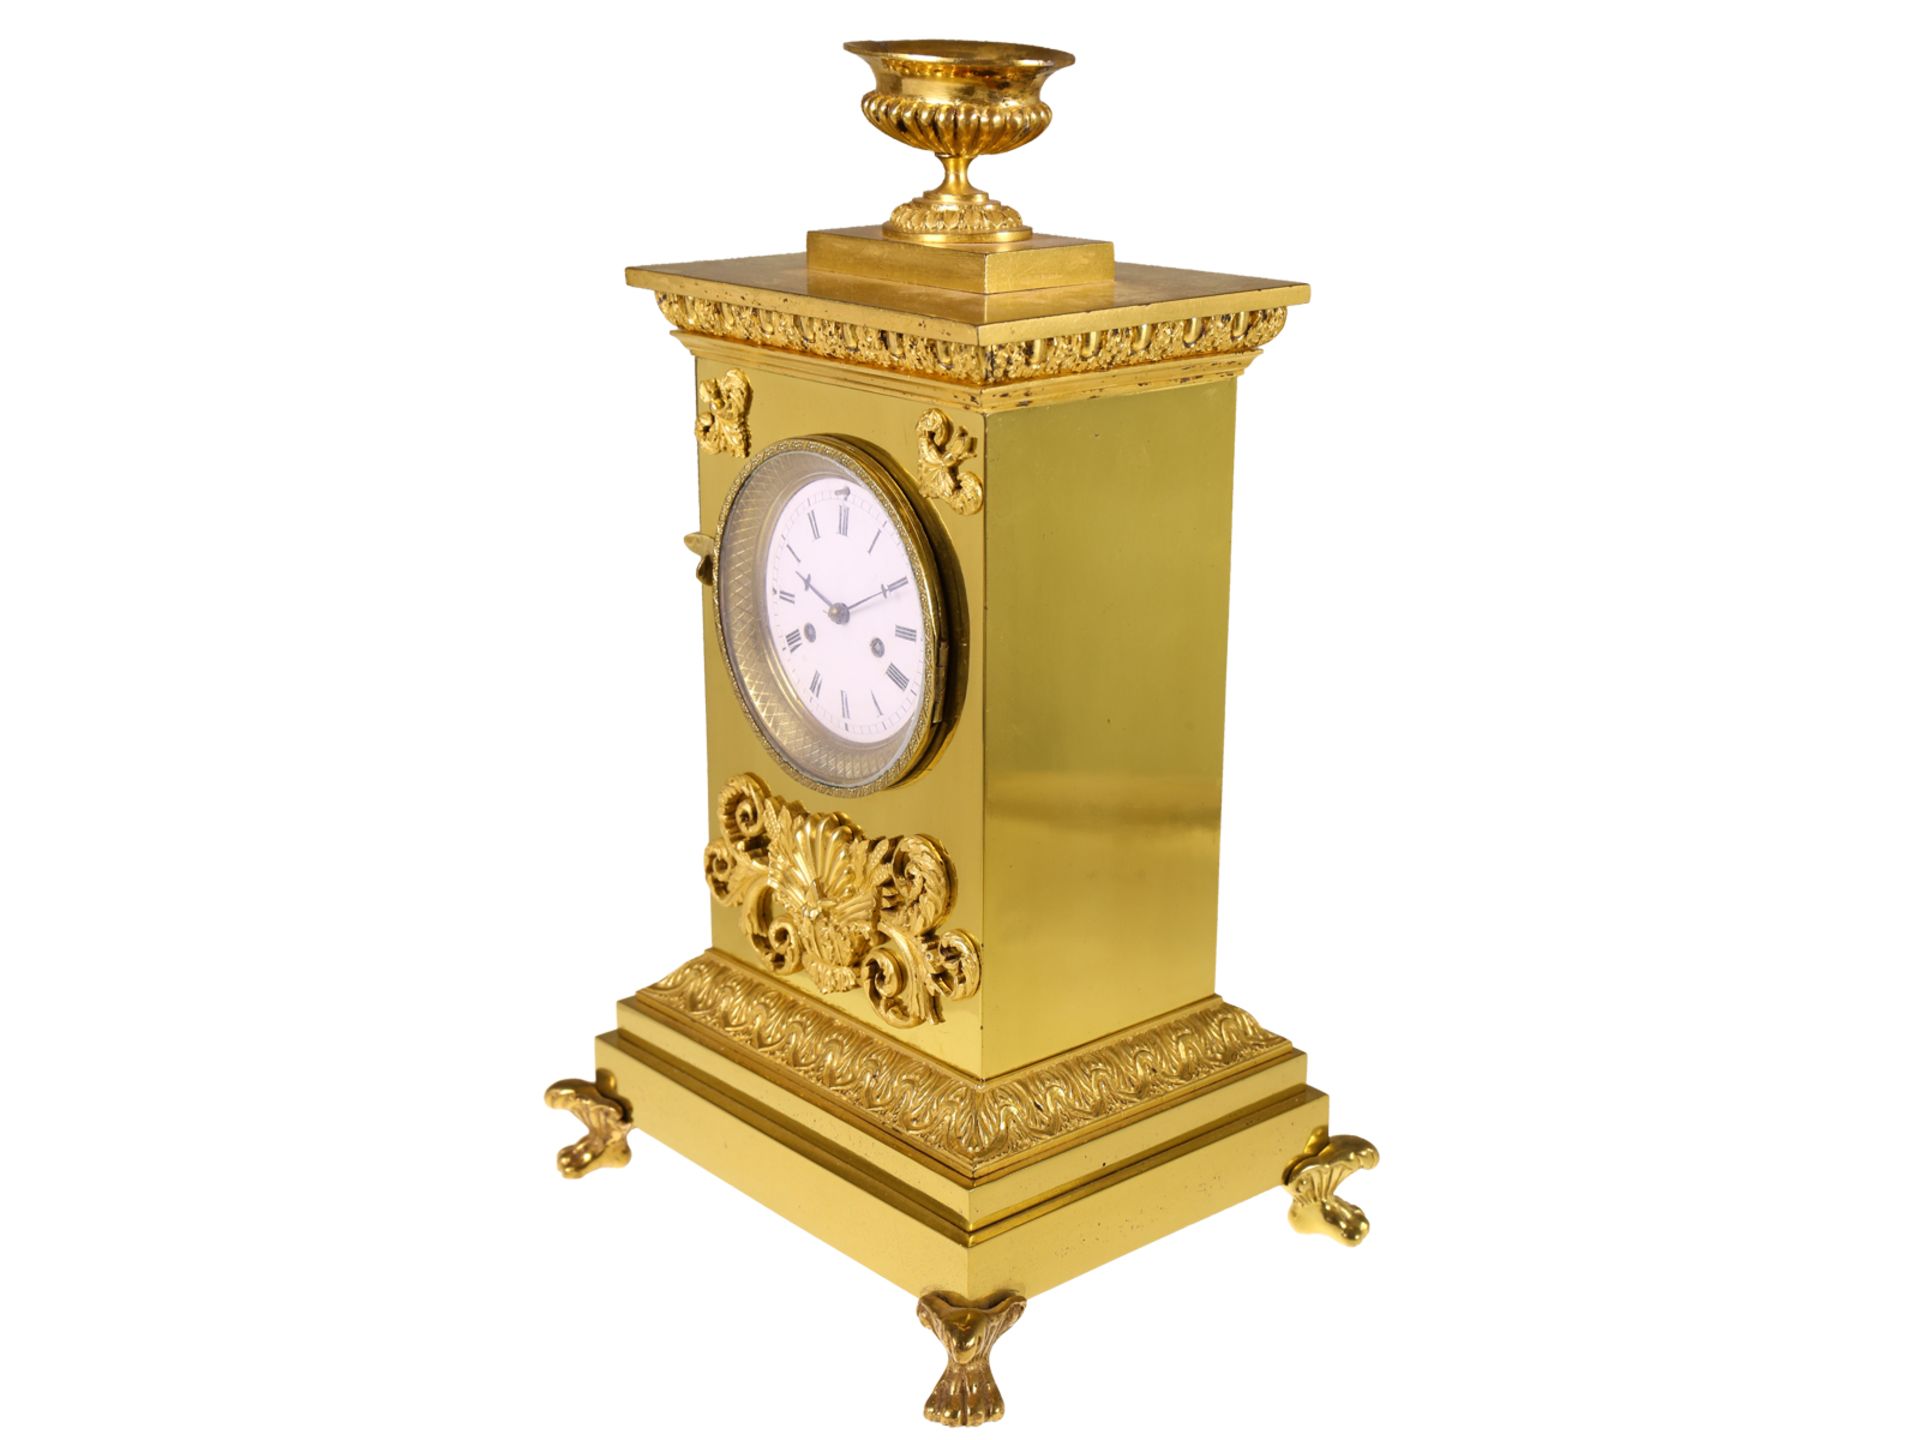 Table clock: decorative fire-gilt bronze clock around 1800, signed Miller Vienna - Image 2 of 4